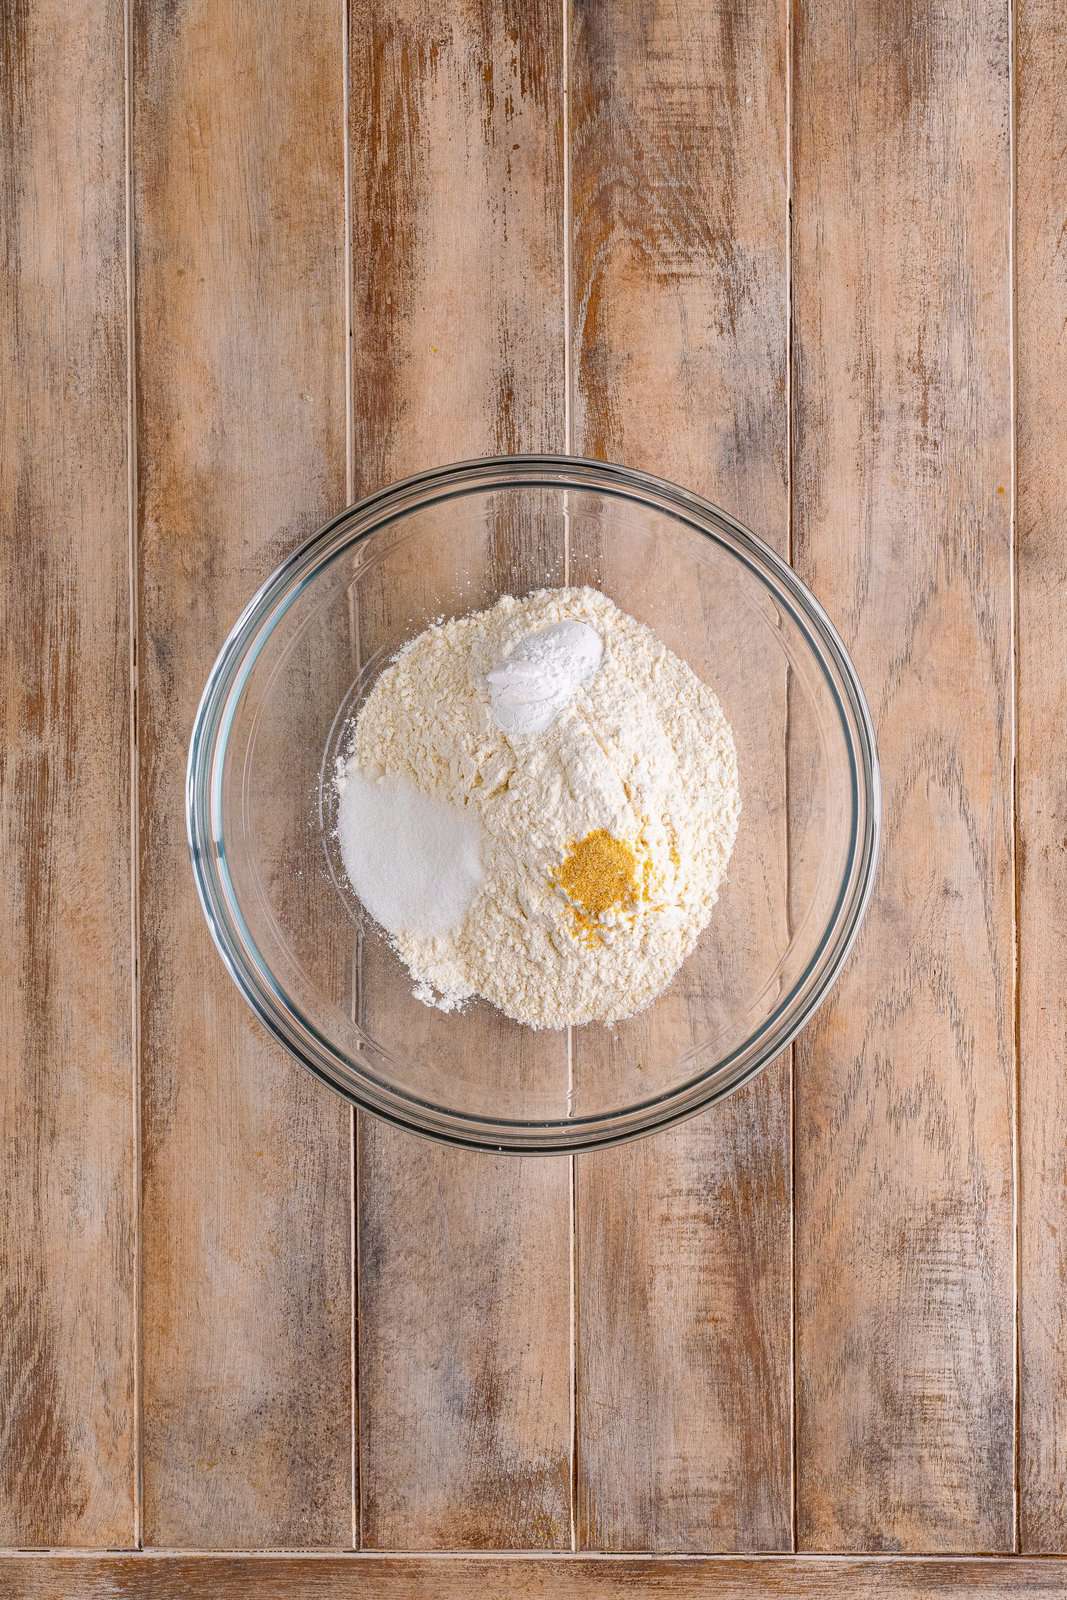 A bowl with flour, baking powder, sugar, and garlic powder.